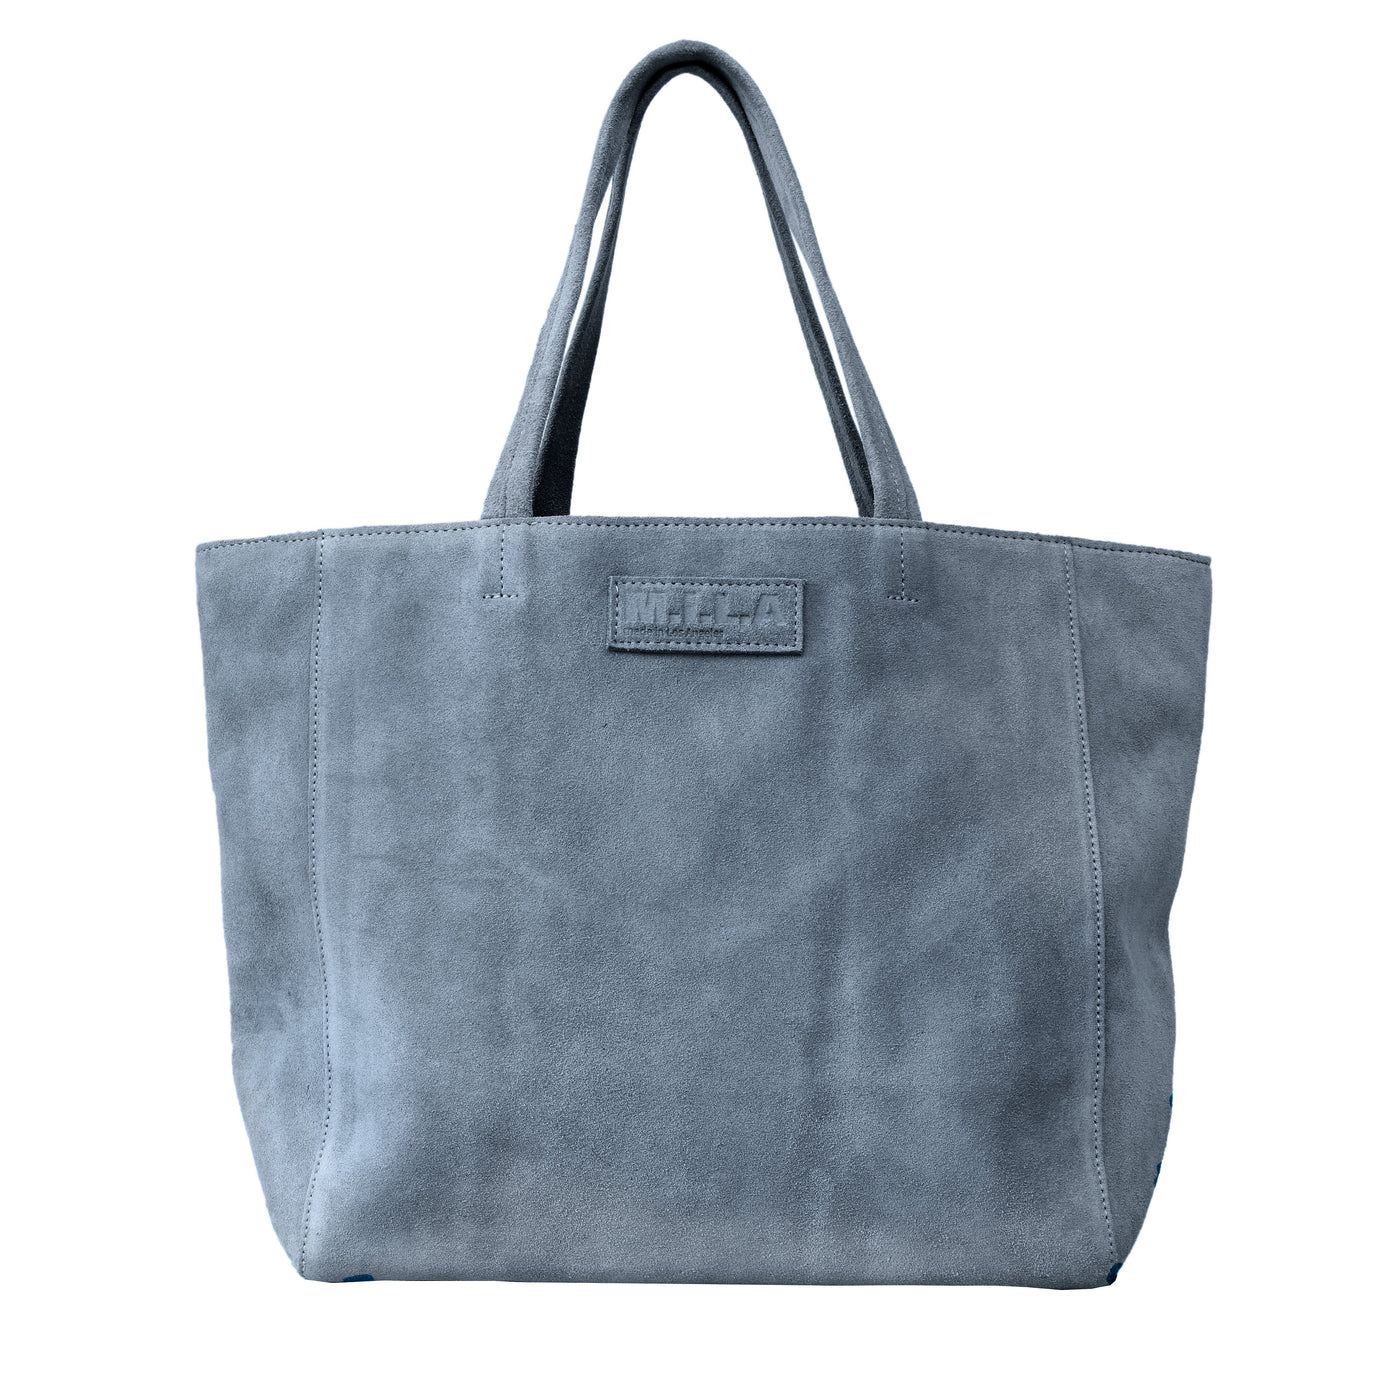 Pin on > Designer bags / purse <